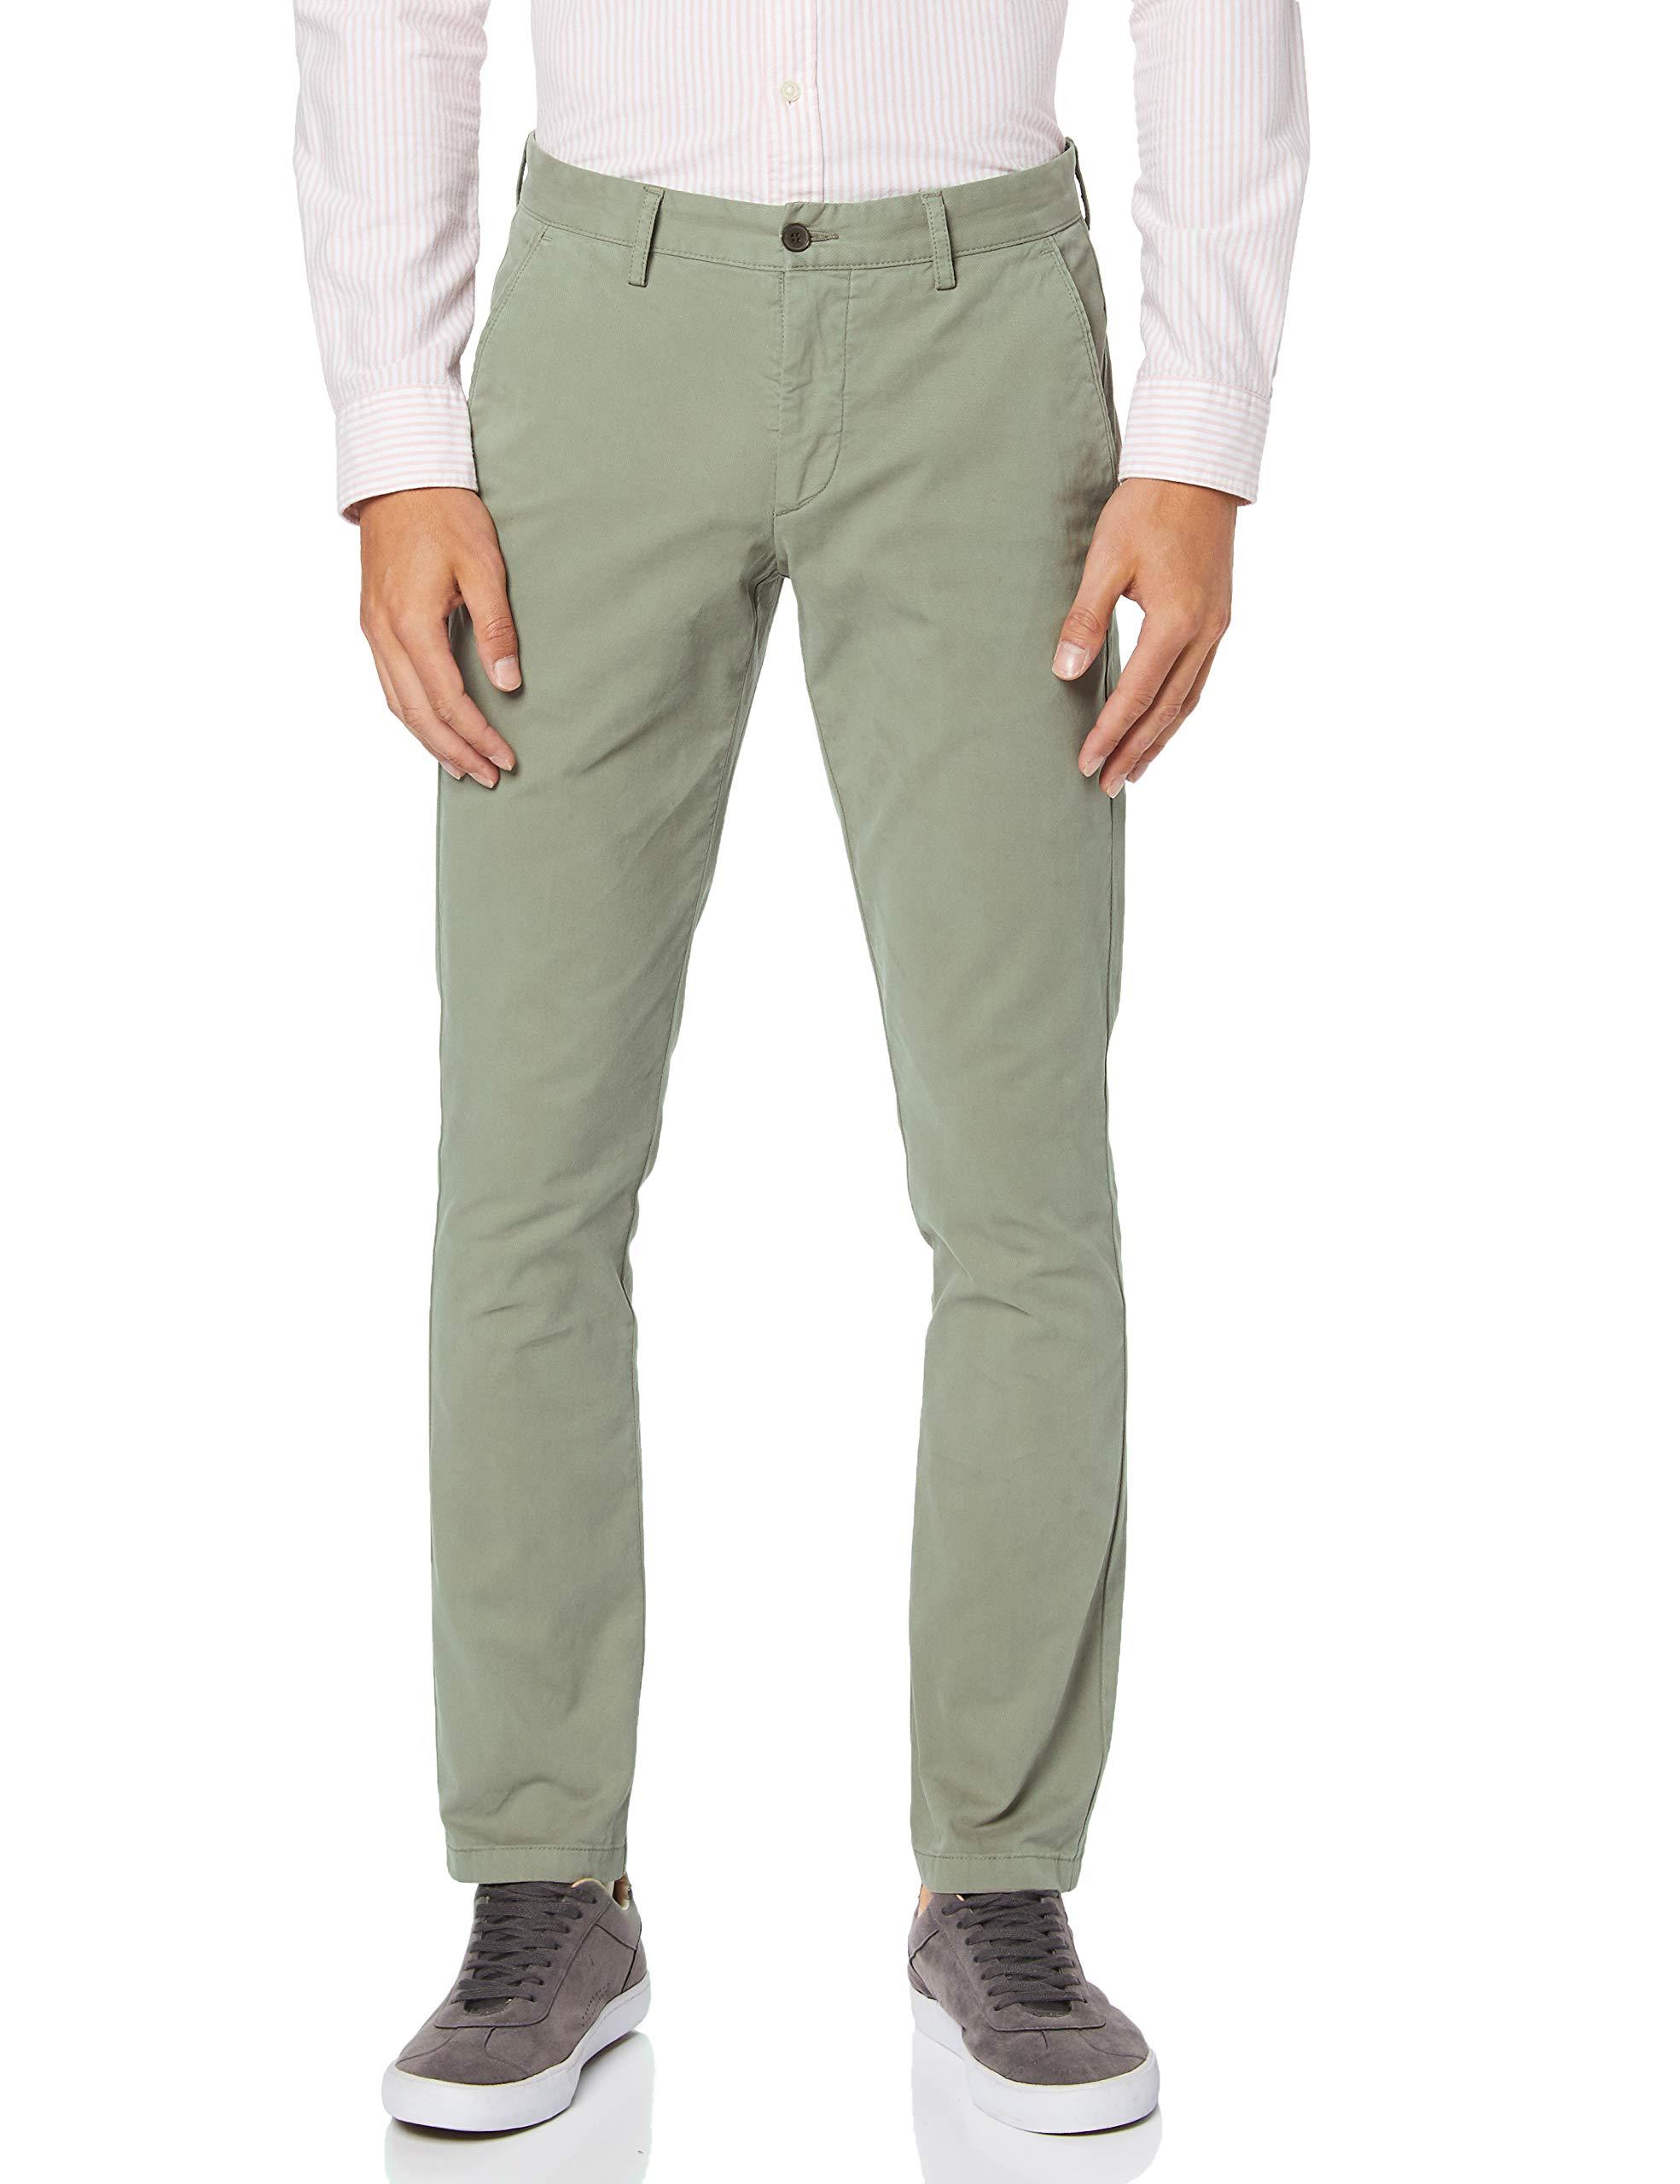 Hackett Garment Dye Texture Trouser in Green for Men - Lyst